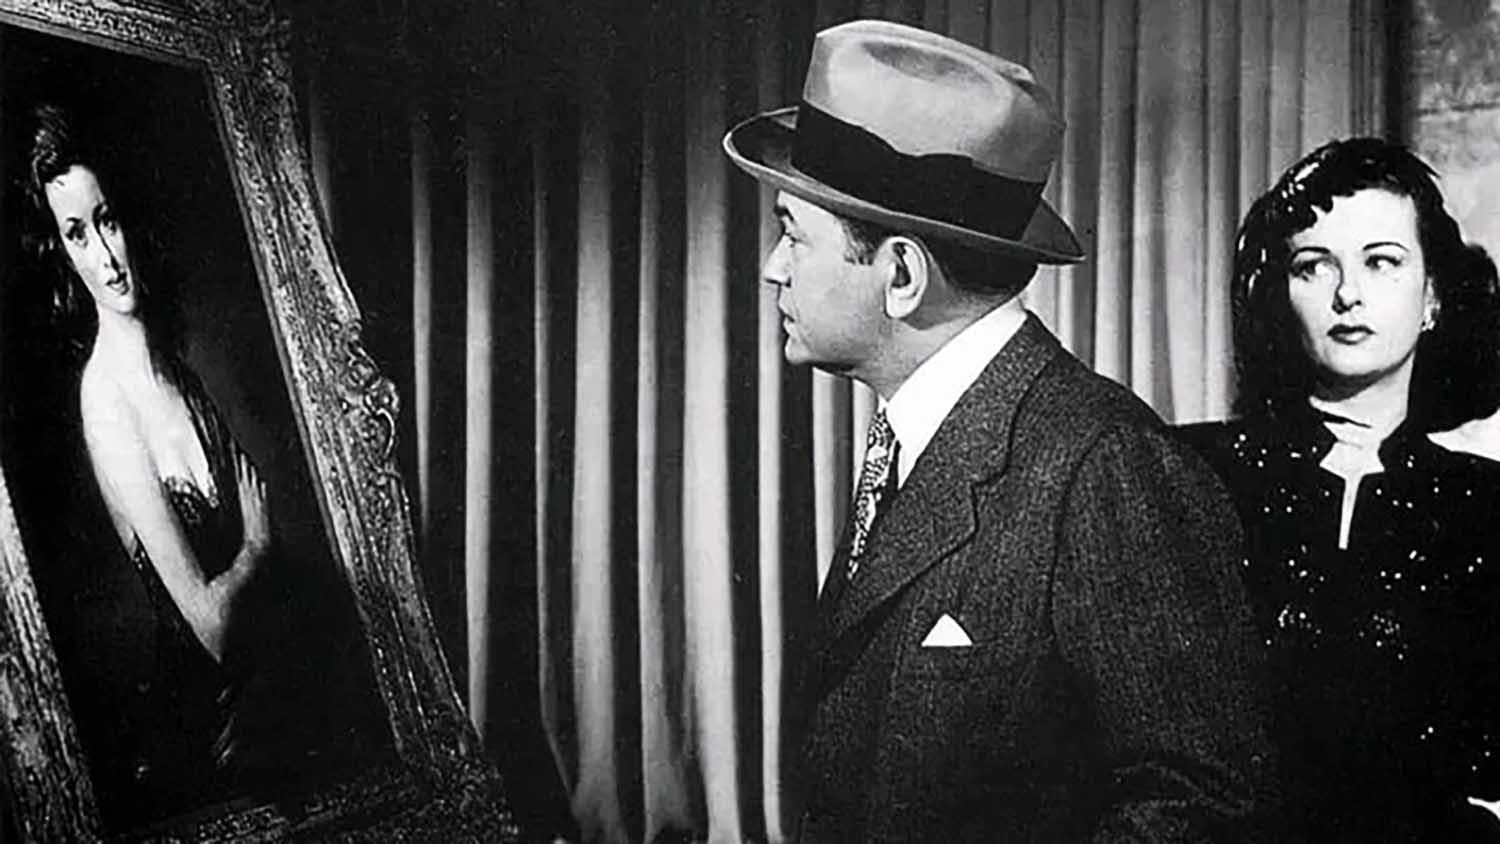 Una scena del film "La donna del ritratto" di Fritz Lang